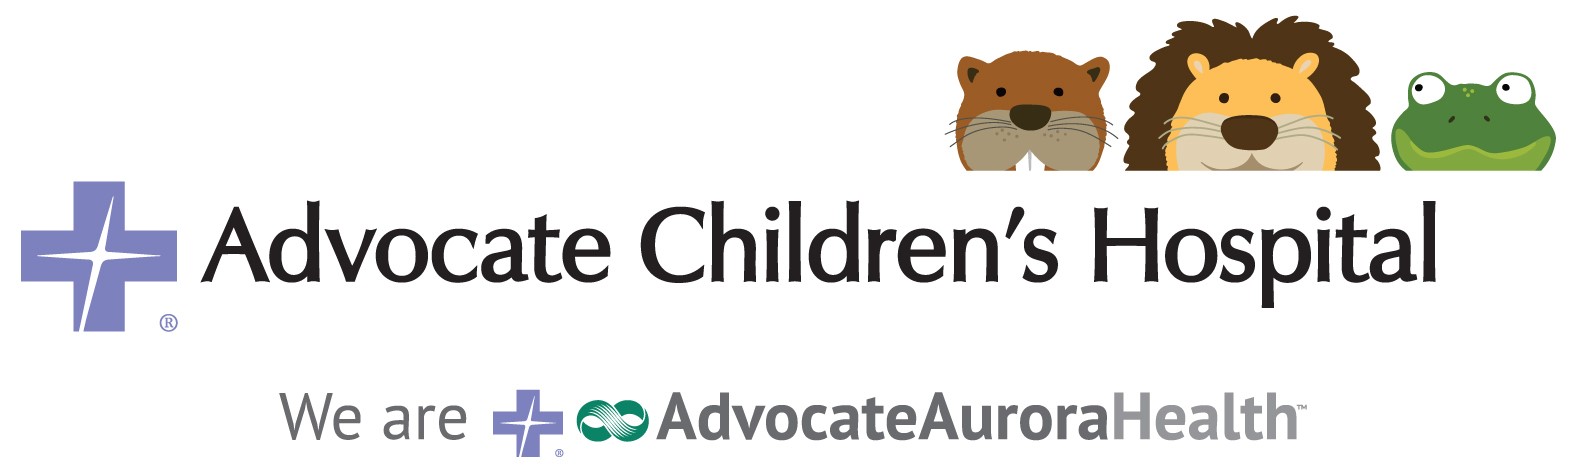 Advocate Childrens Hospital